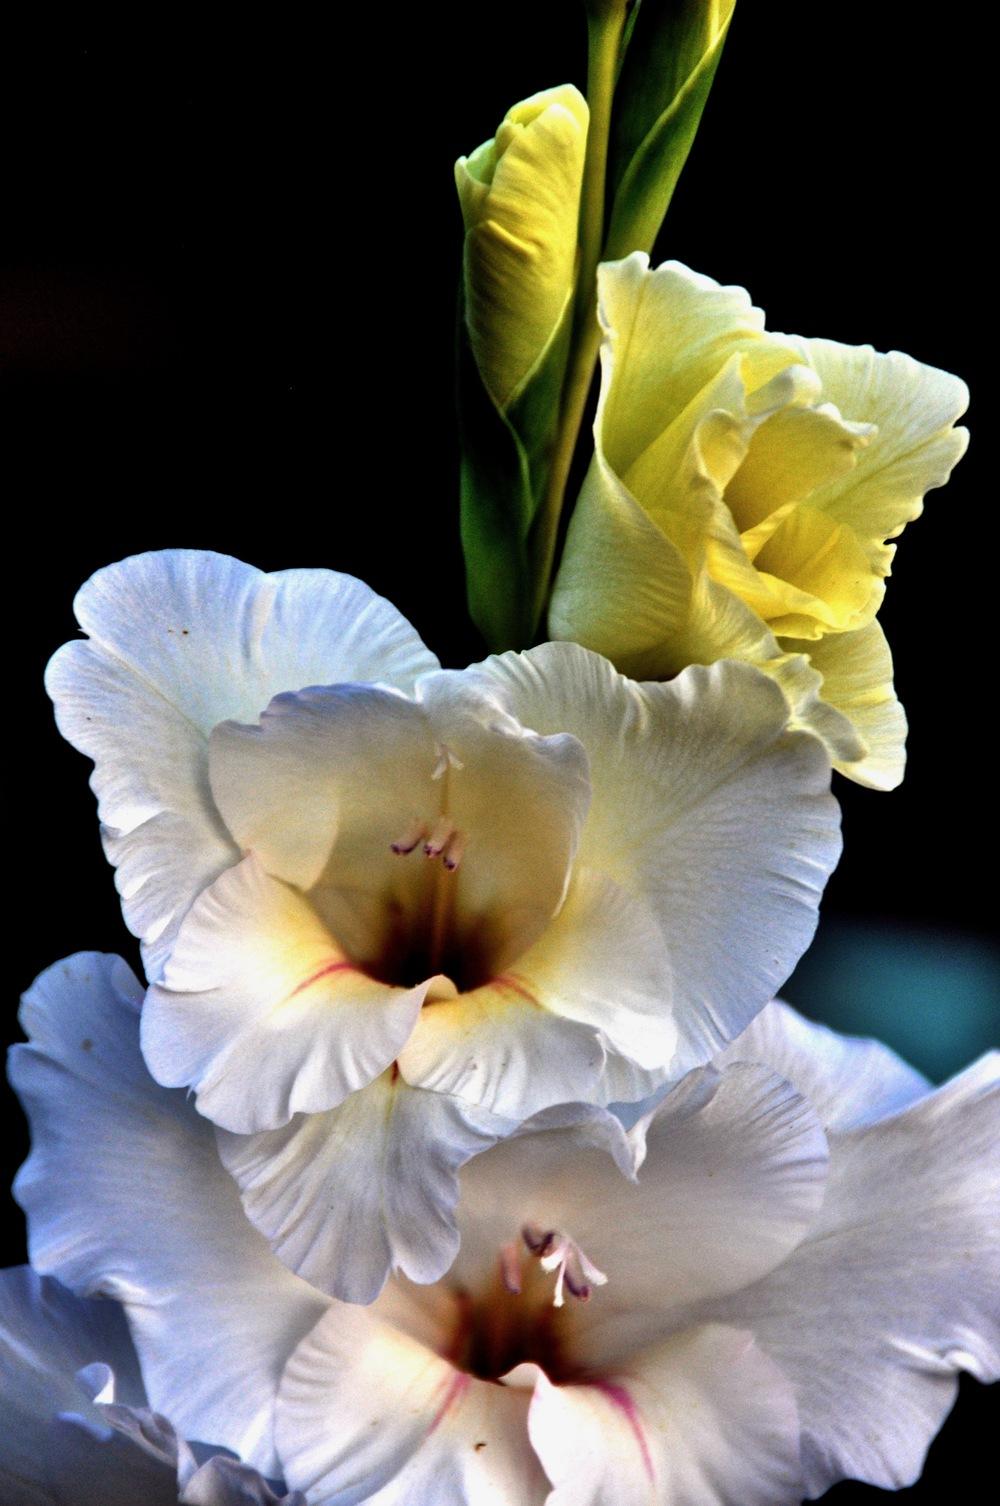 Photo of Gladiola (Gladiolus) uploaded by Fleur569